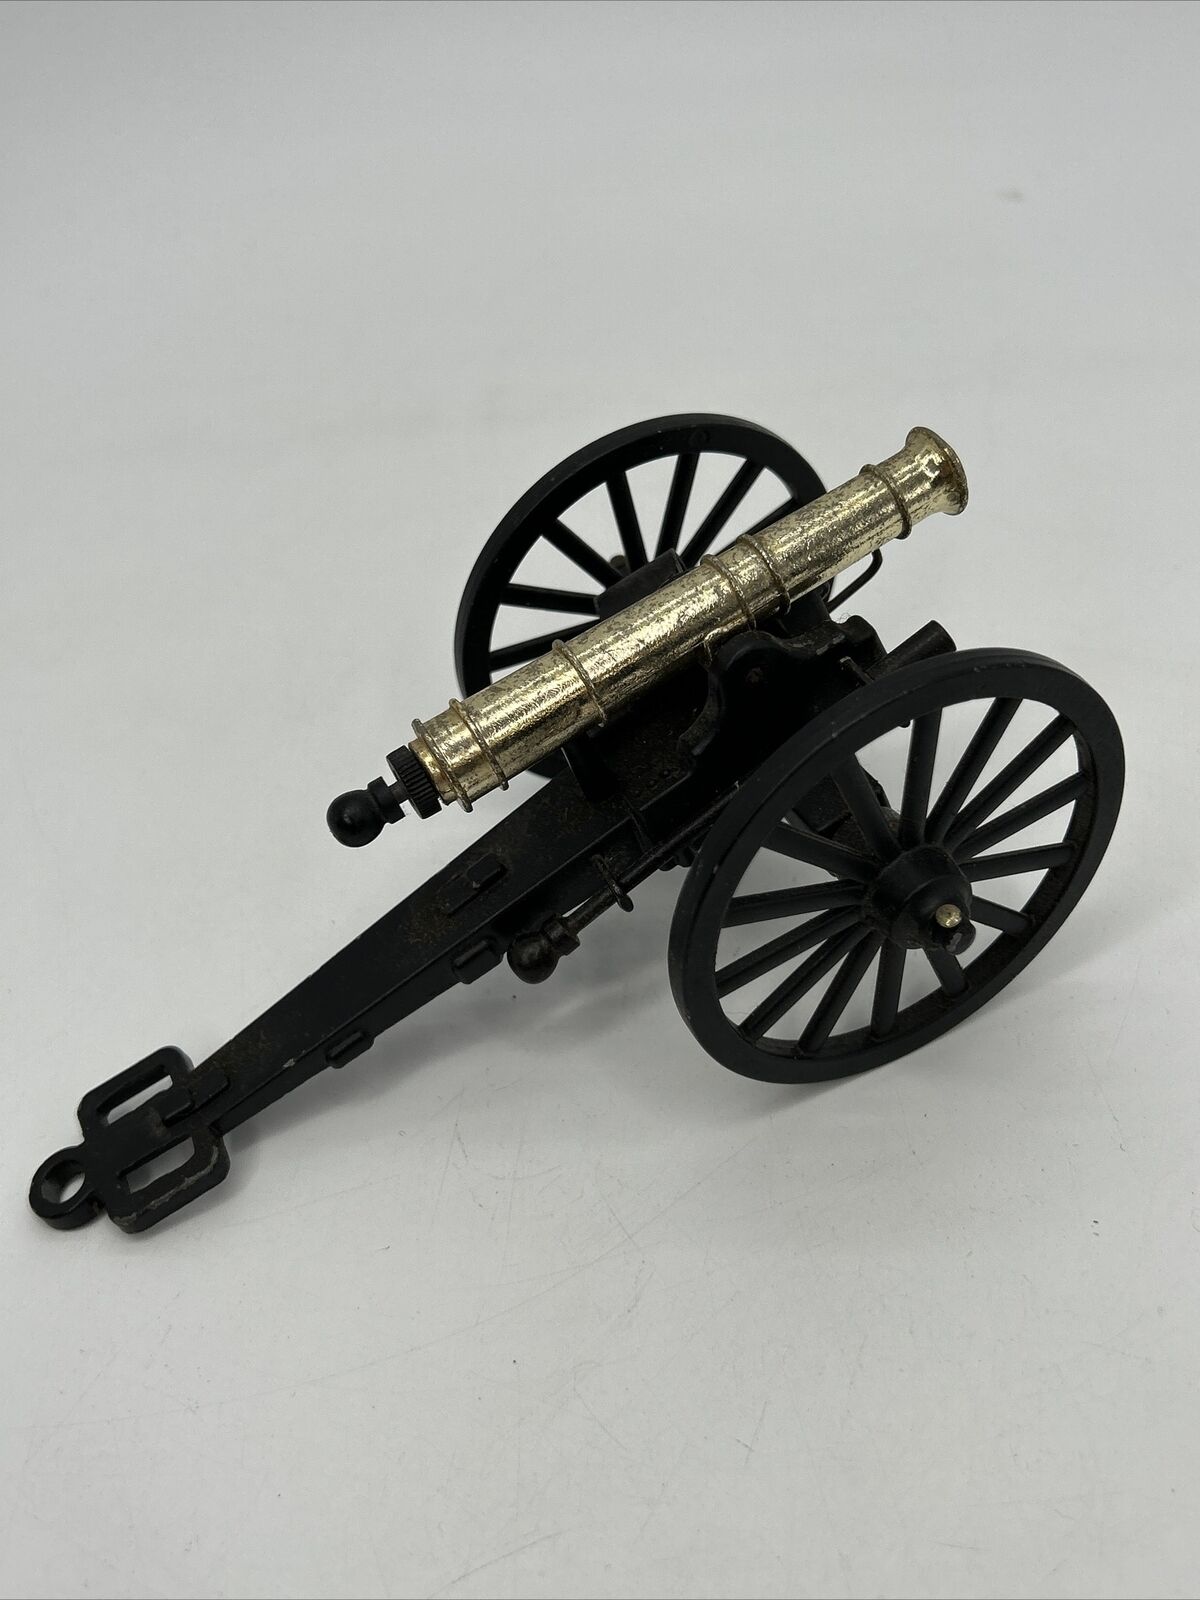 LA Art. 374 Brass Artillery Cannon Towable Minatare Desk Italy Italian